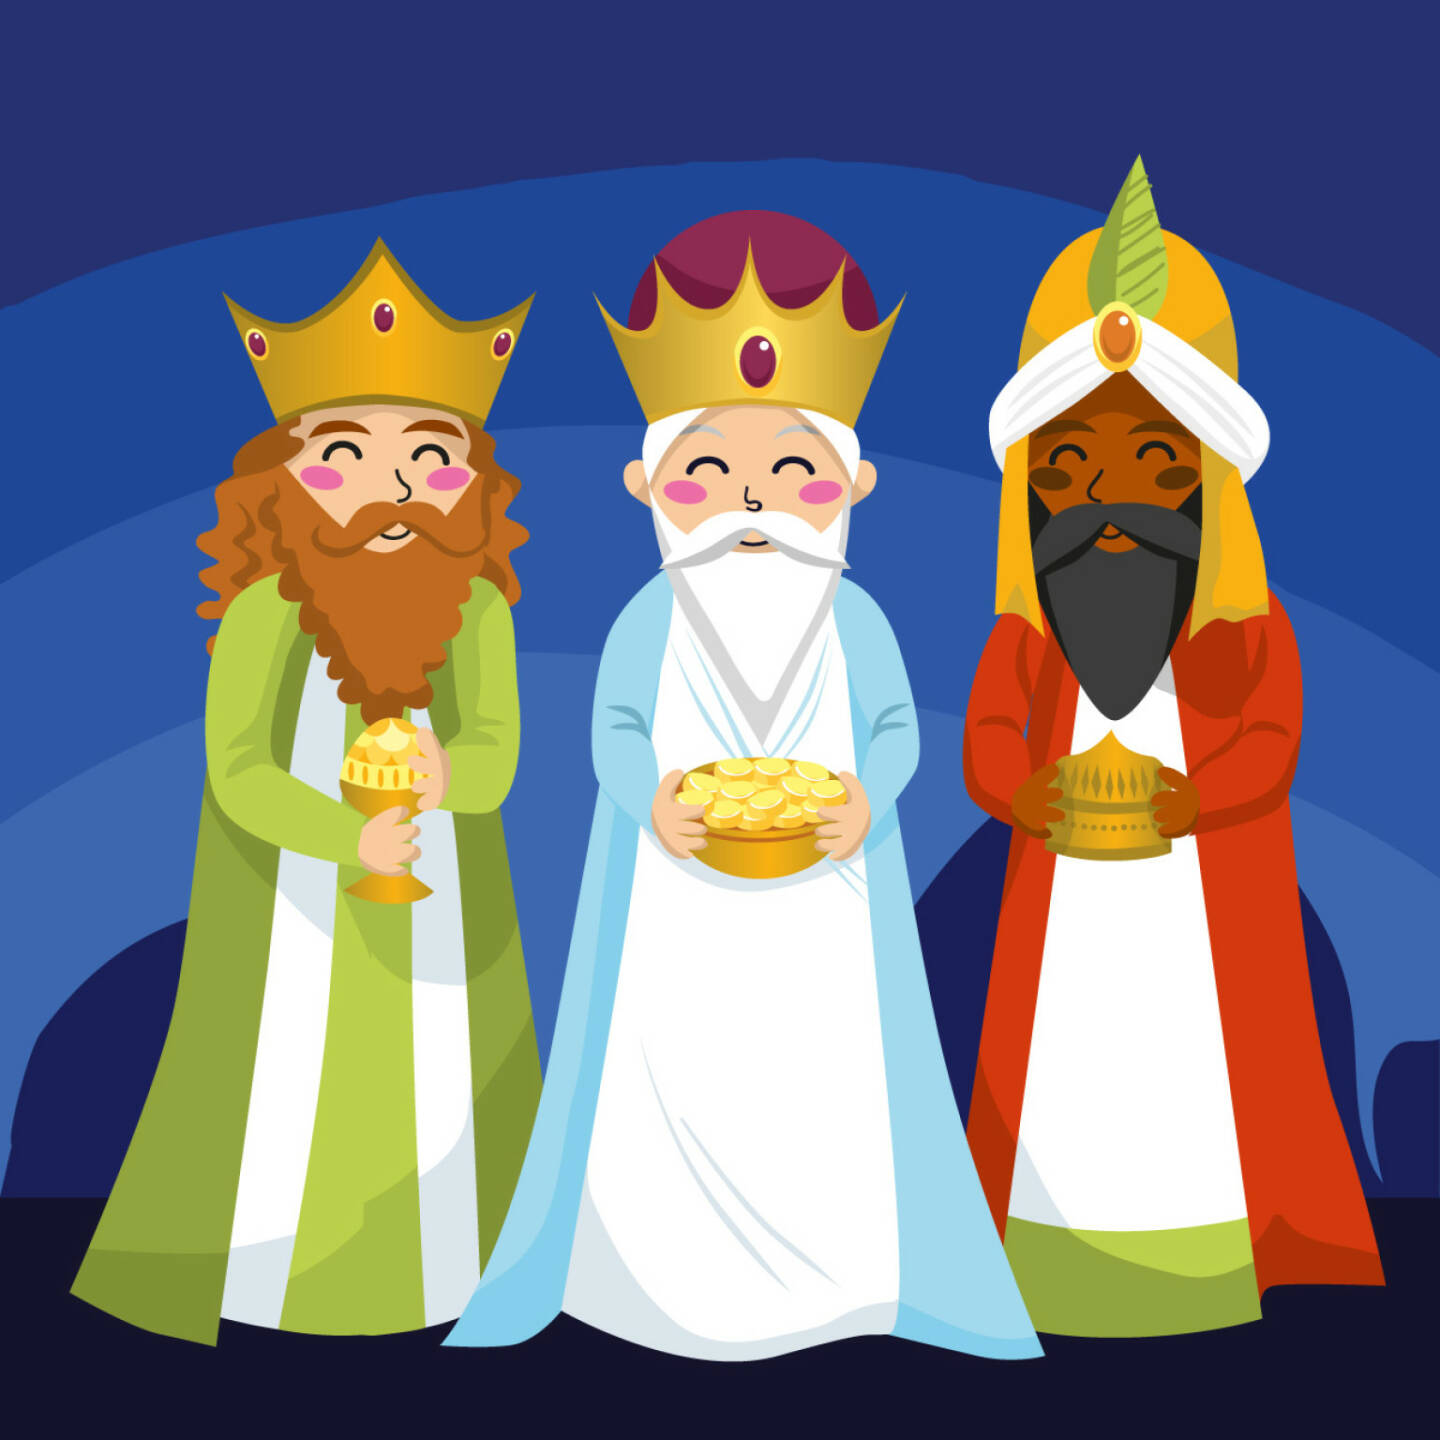 Drei Könige, heiligen drei Könige, 3 Königstag http://www.shutterstock.com/de/pic-66980008/stock-vector-three-wise-men-bring-gifts-to-jesus-on-christmas.html